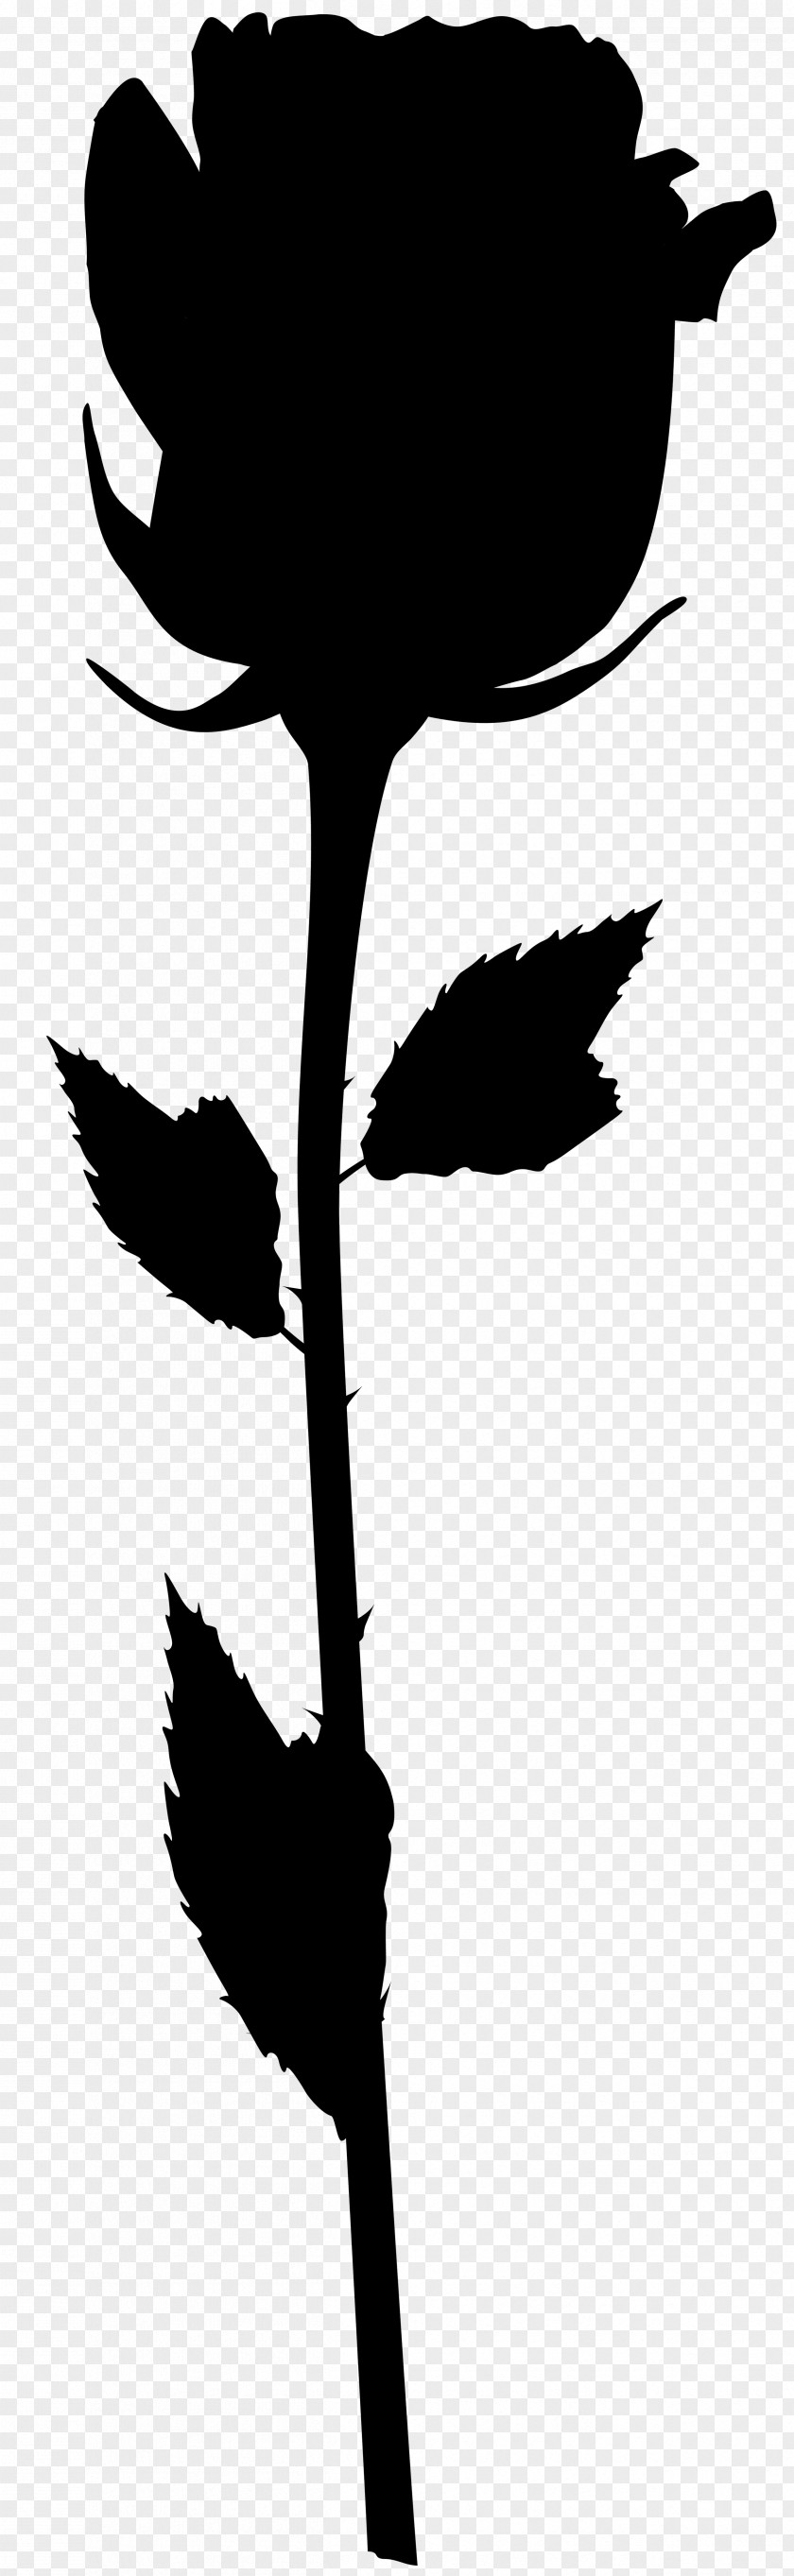 Flower Clip Art Plant Stem Leaf Silhouette PNG